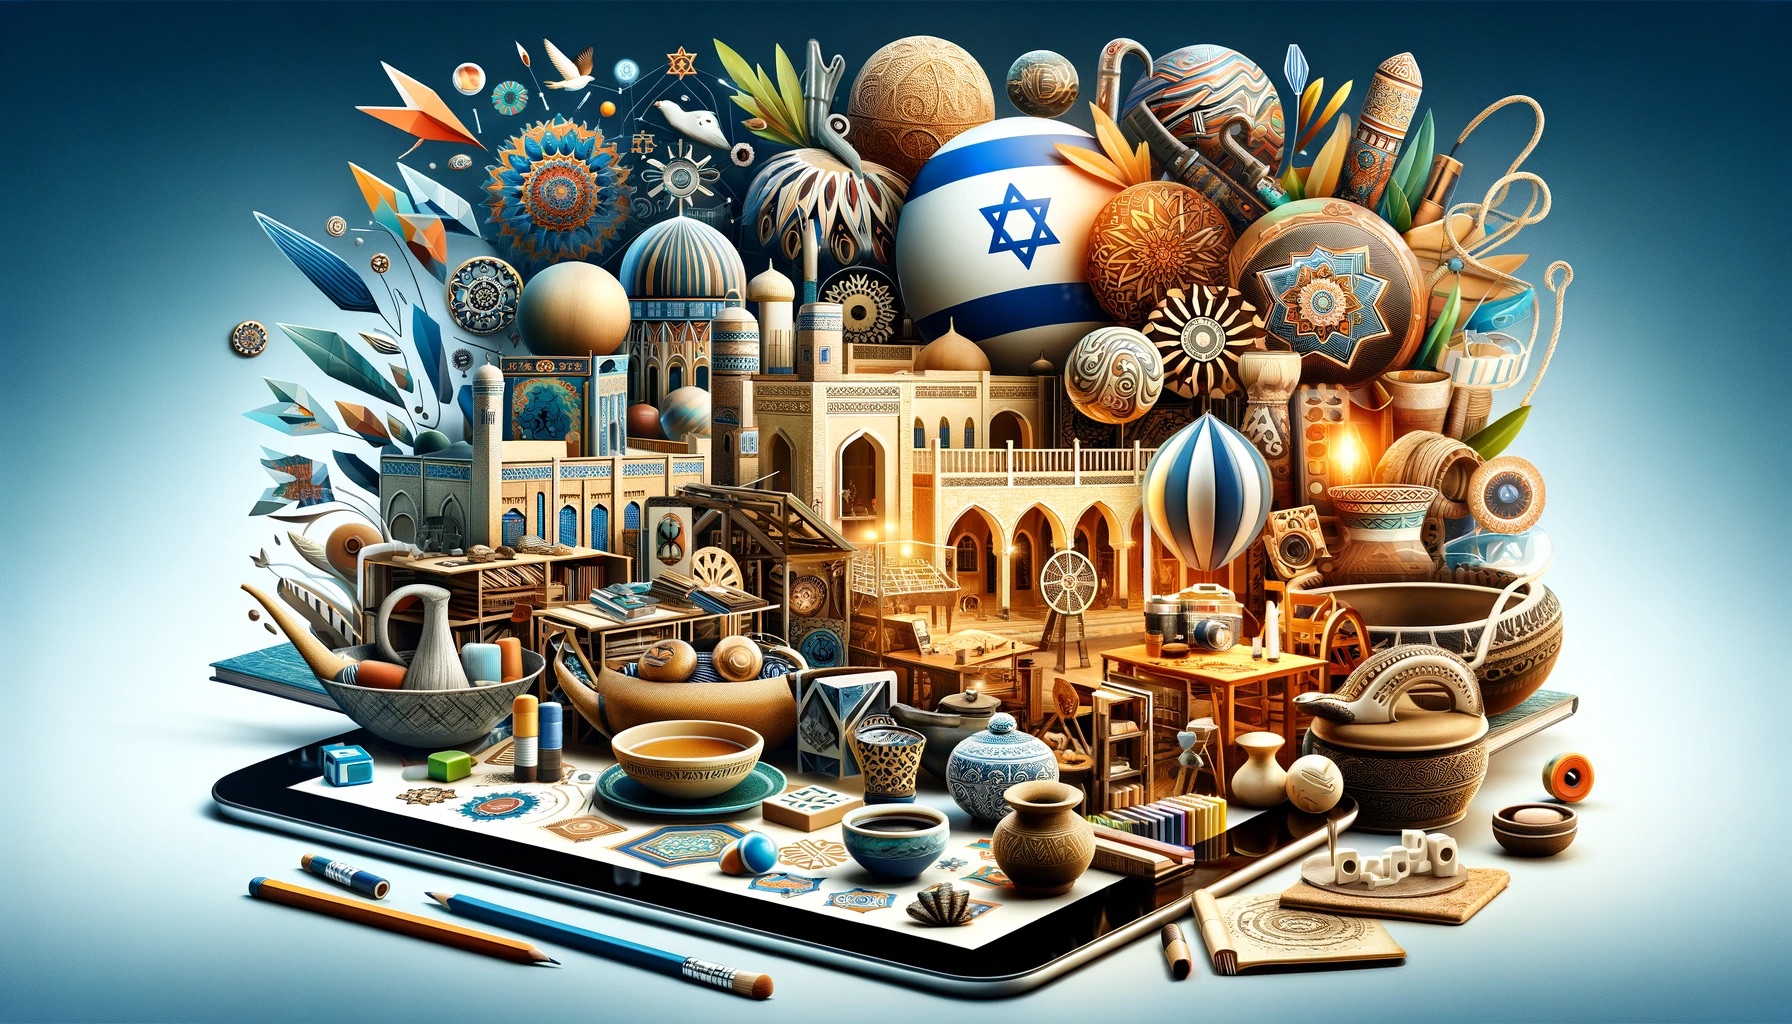 Celebrating Israeli Art and Culture through Digital Wallpapers